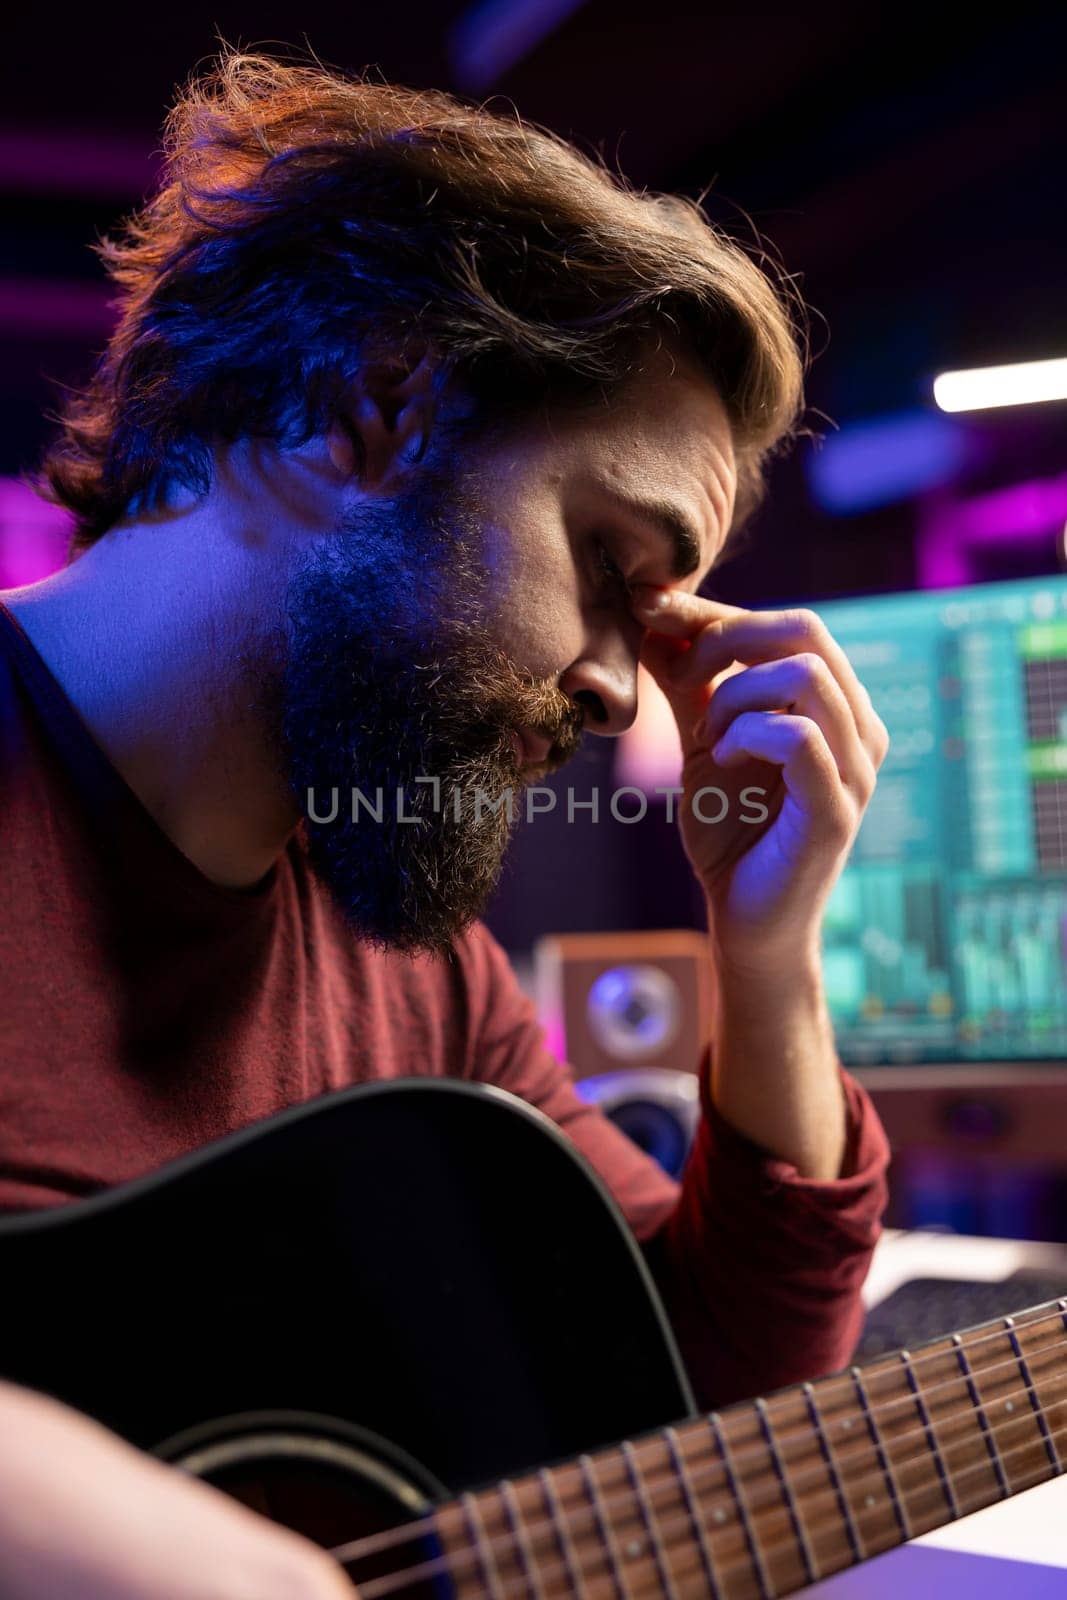 Stressed sleepy artist practicing acoustic instrument in his home studio by DCStudio